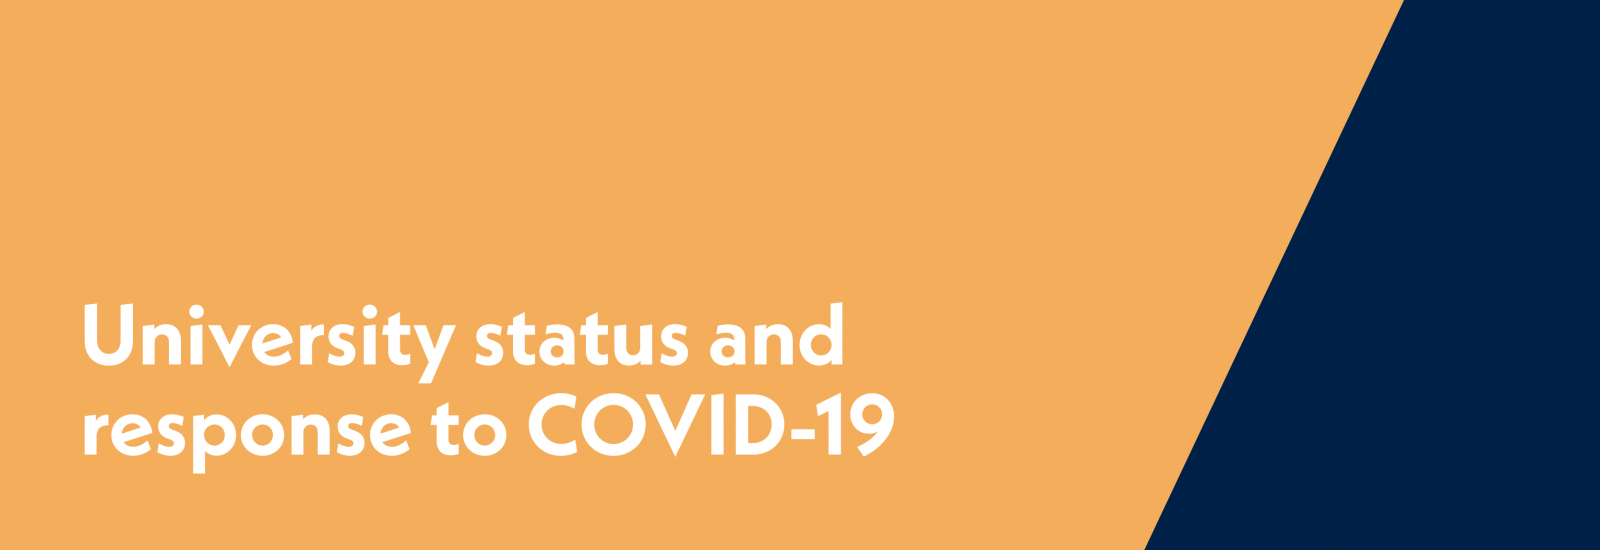 University status and response to COVID-19